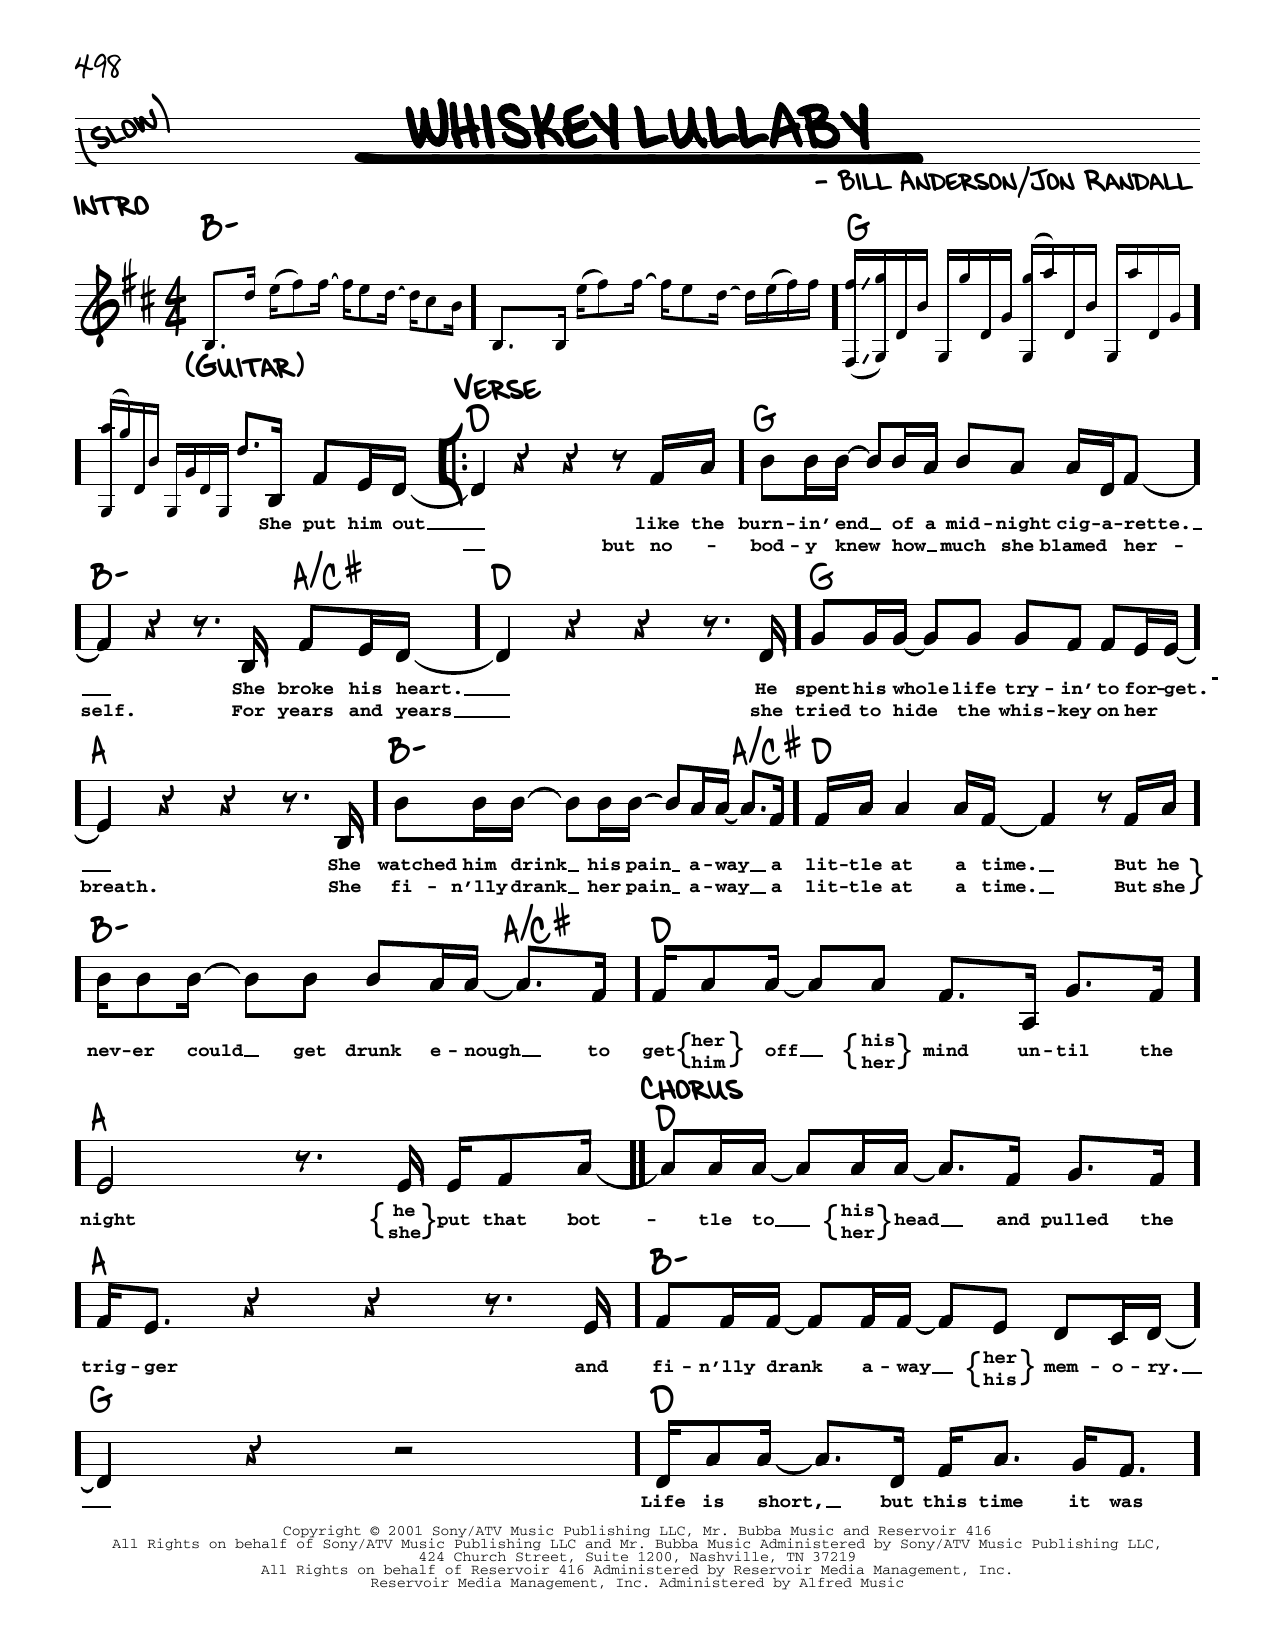 Brad Paisley Whiskey Lullaby (feat. Alison Krauss) Sheet Music Notes & Chords for Lyrics & Chords - Download or Print PDF